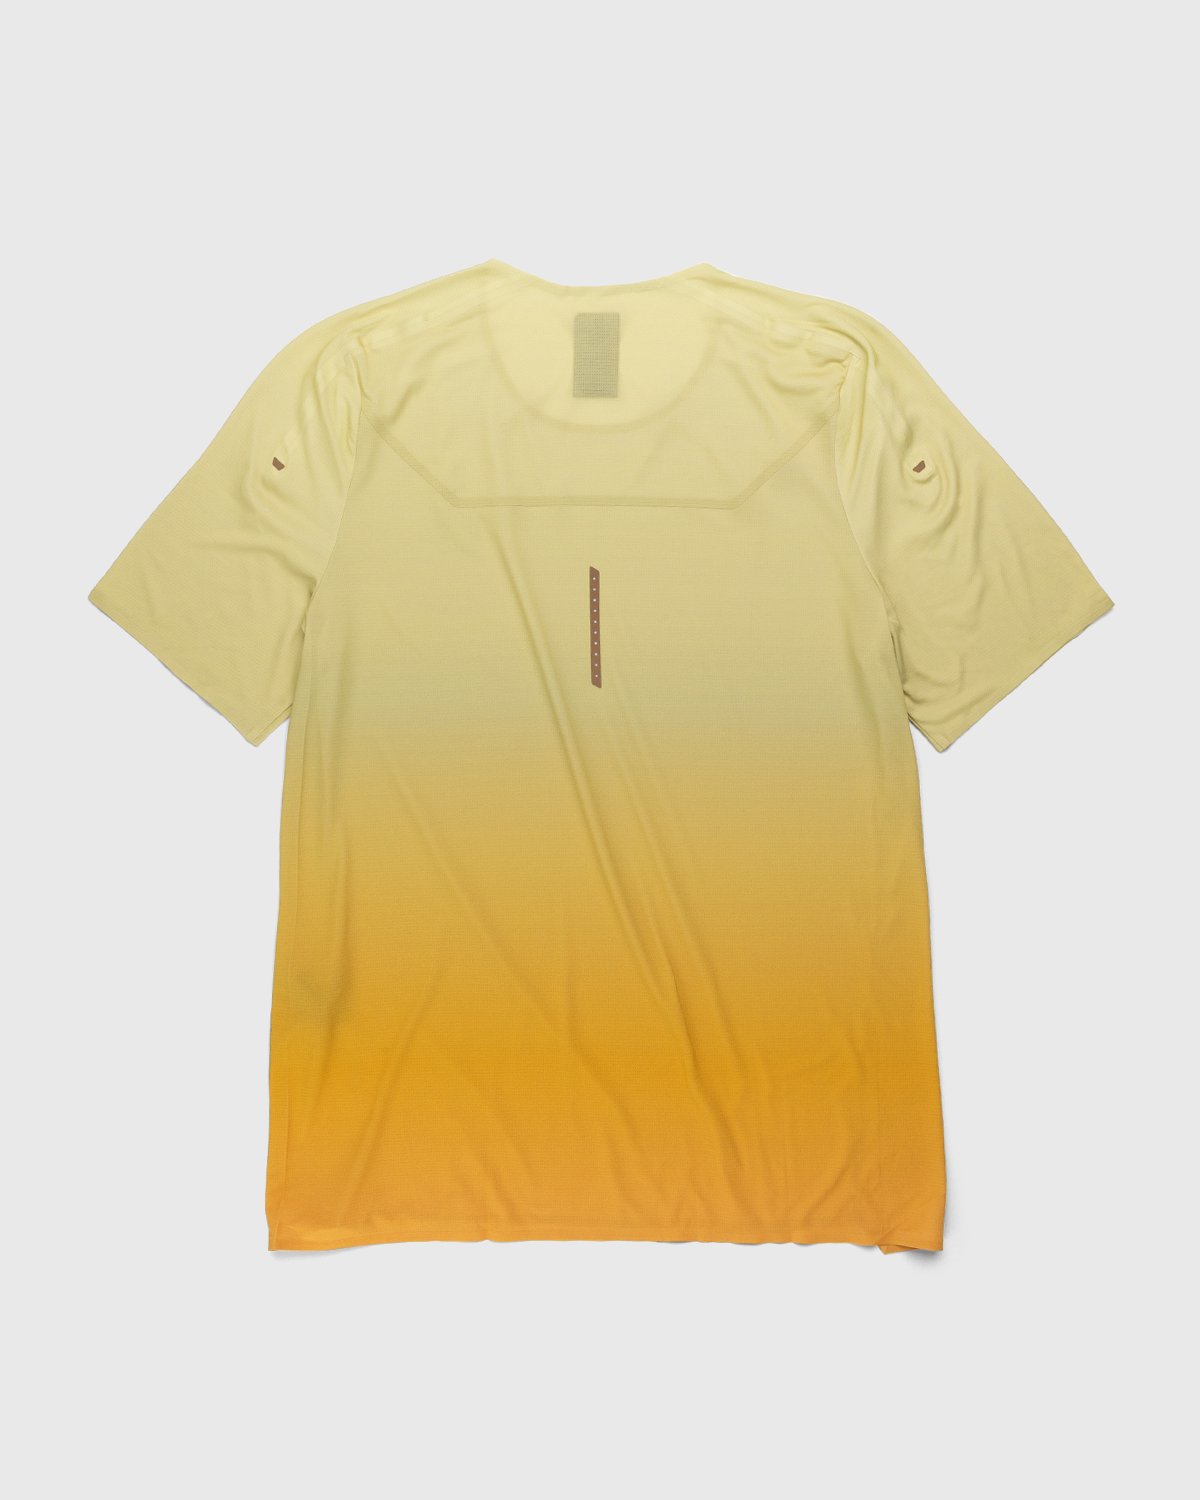 Loewe x On - Women's Performance T-Shirt Gradient Orange - T-Shirts - Orange - Image 2